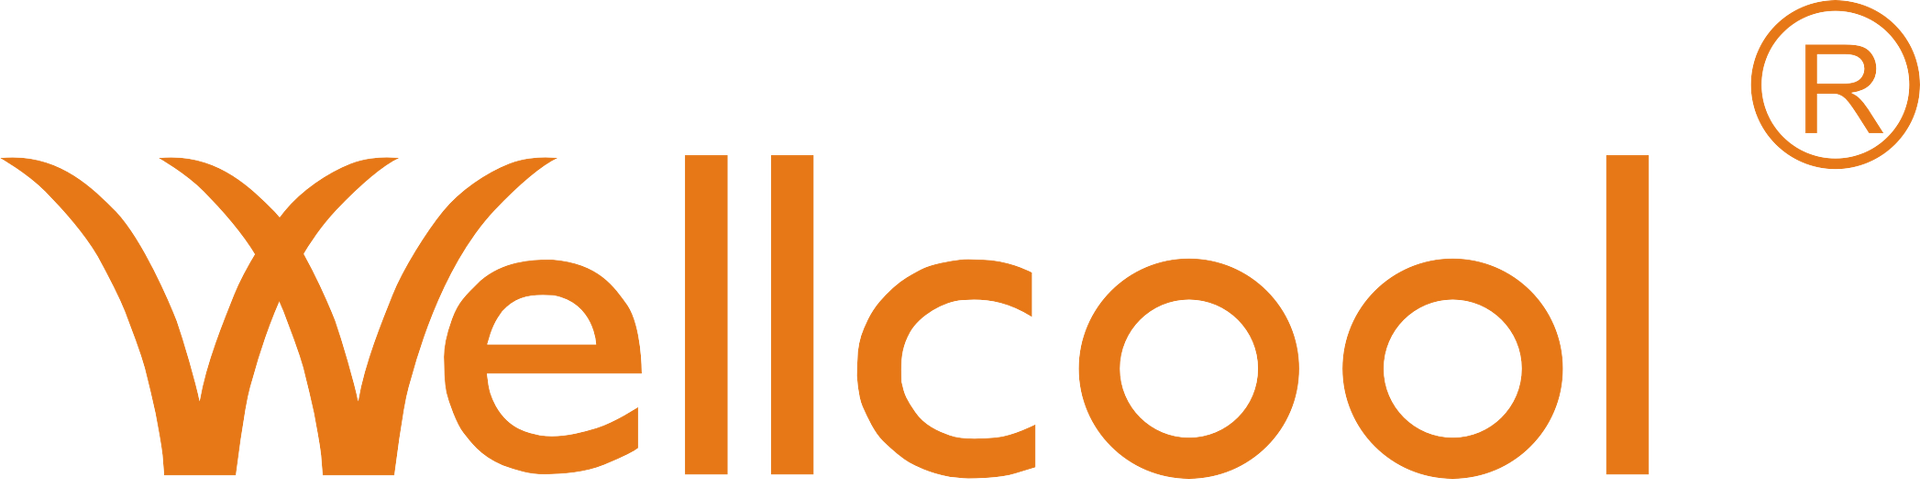 Wellcool Cushion Technology Co., Ltd. logo